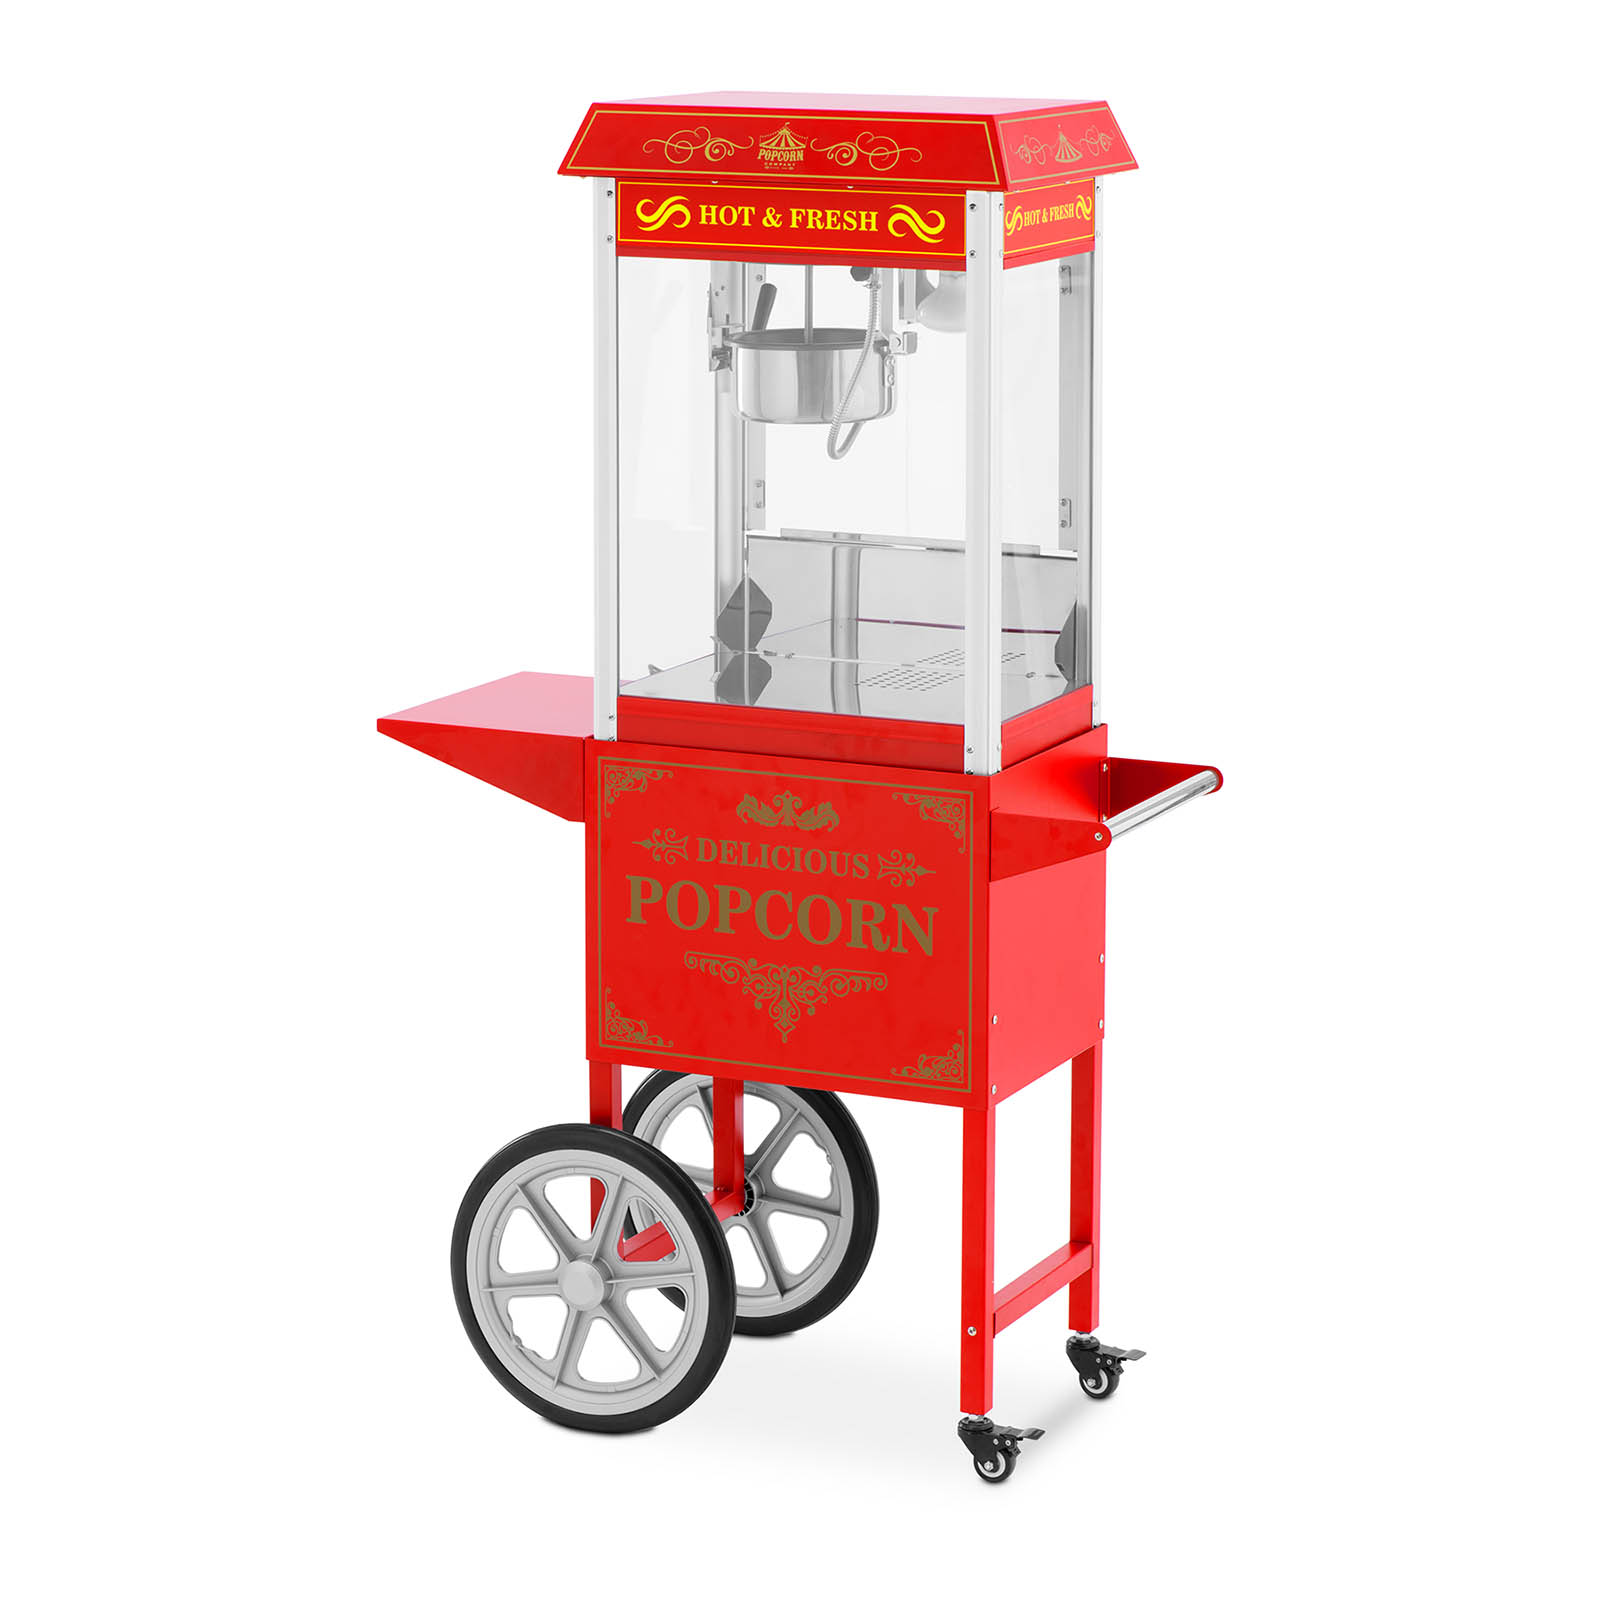 Popcornmaschine mit Wagen - Retro-Design - 150 / 180 °C - rot - Royal Catering